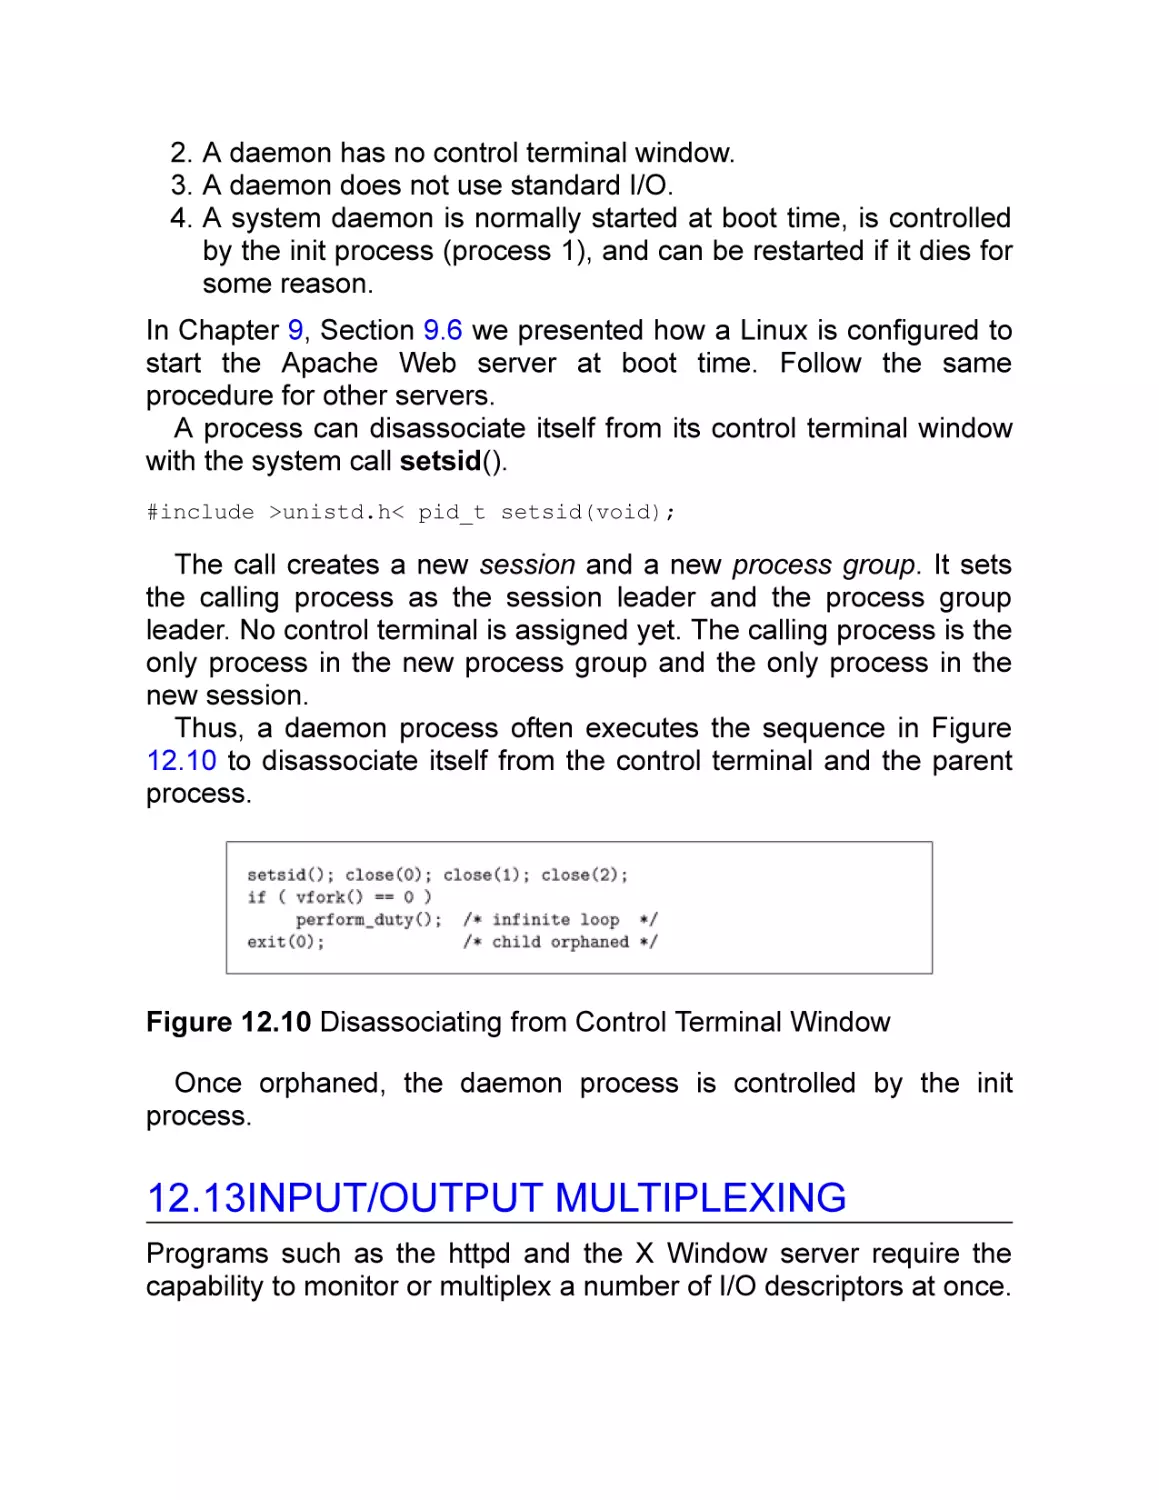 12.13 Input/Output Multiplexing